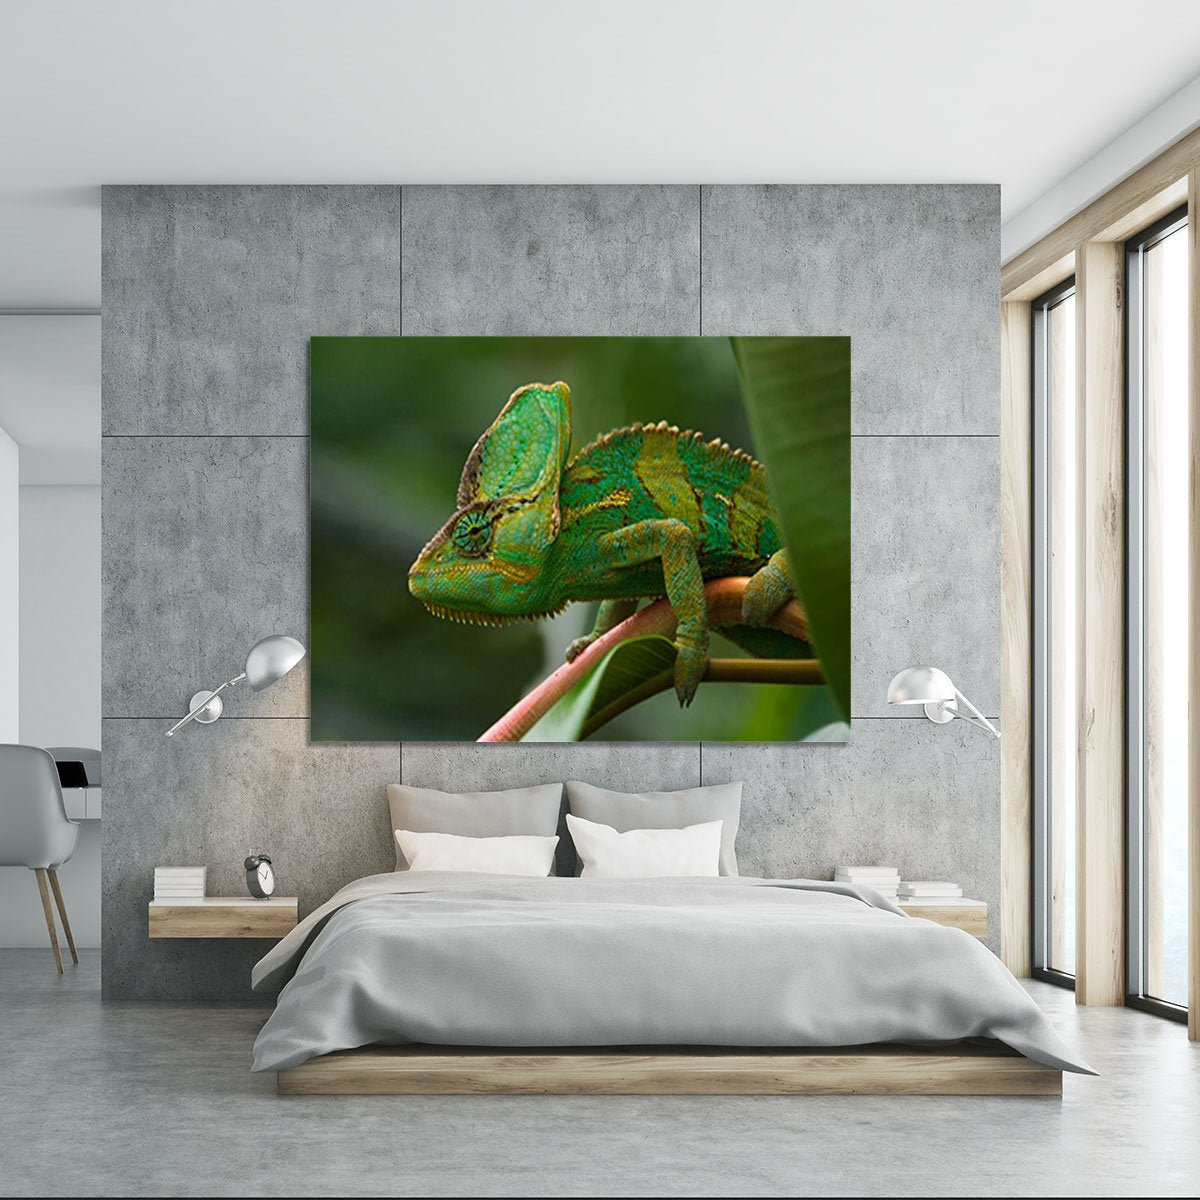 Beaitiful green Jemen chameleon Canvas Print or Poster